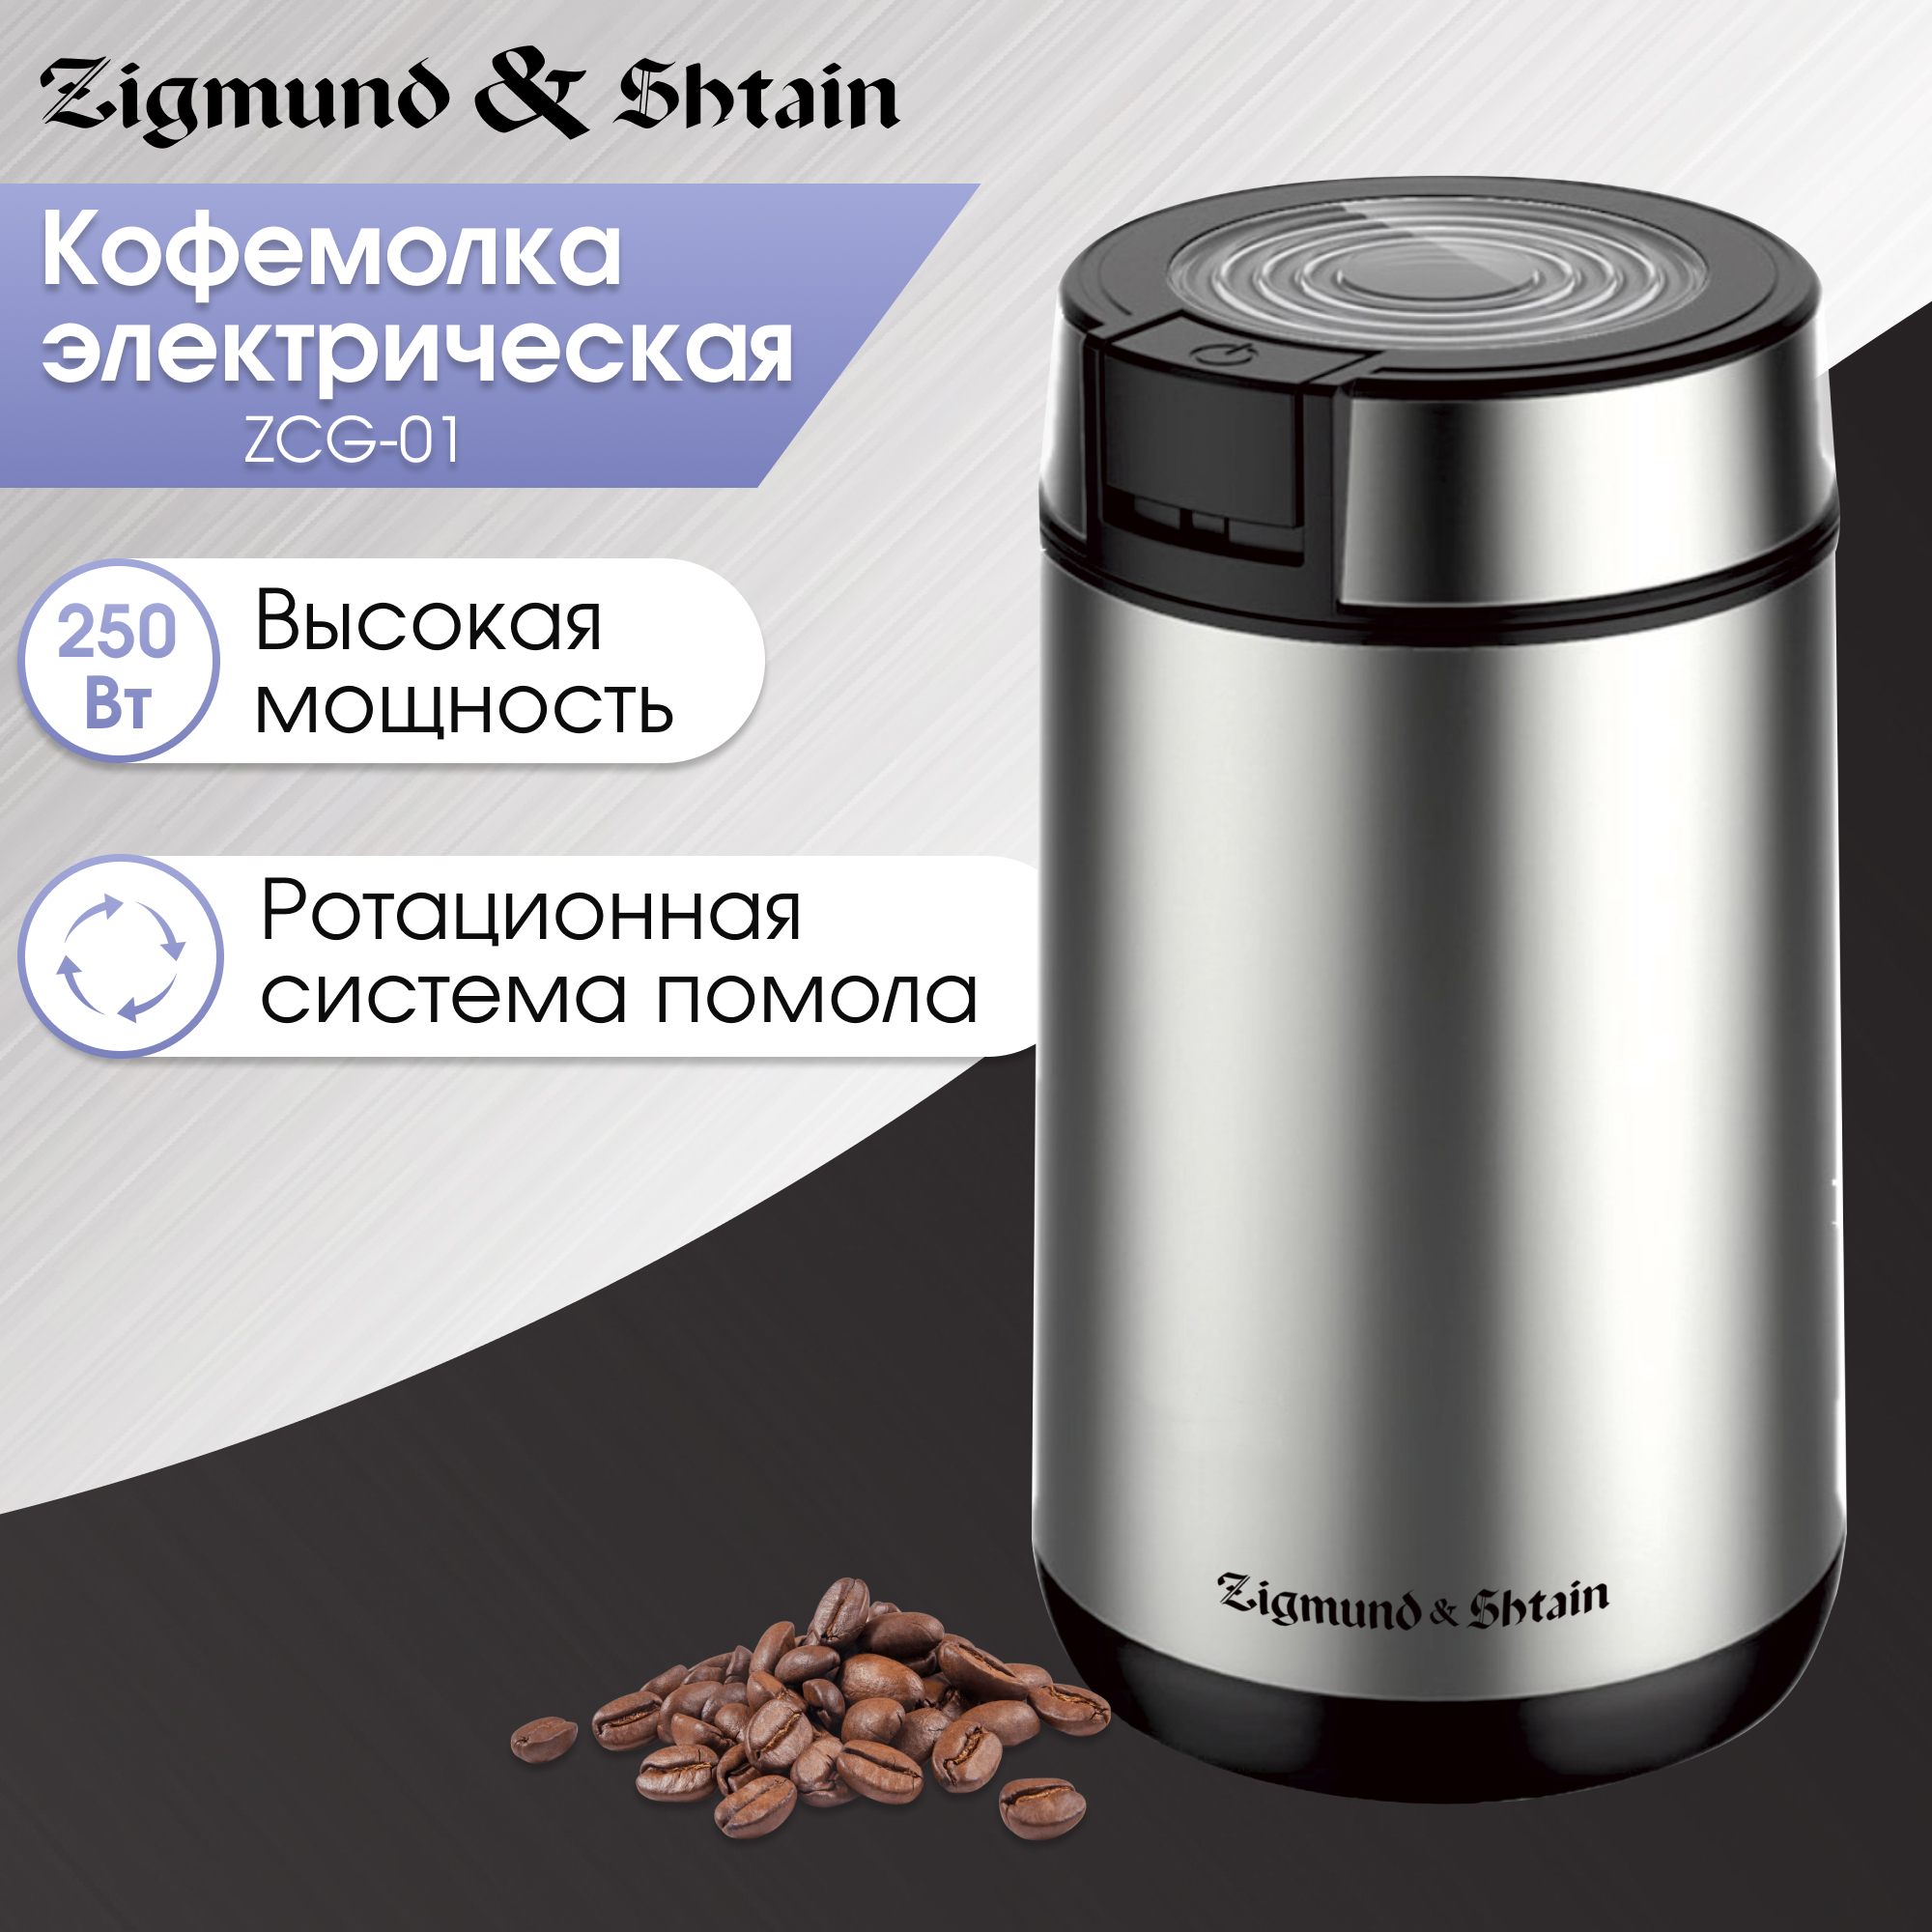 Кофемолка Zigmund & Shtain ZCG-01 серебристый, серый